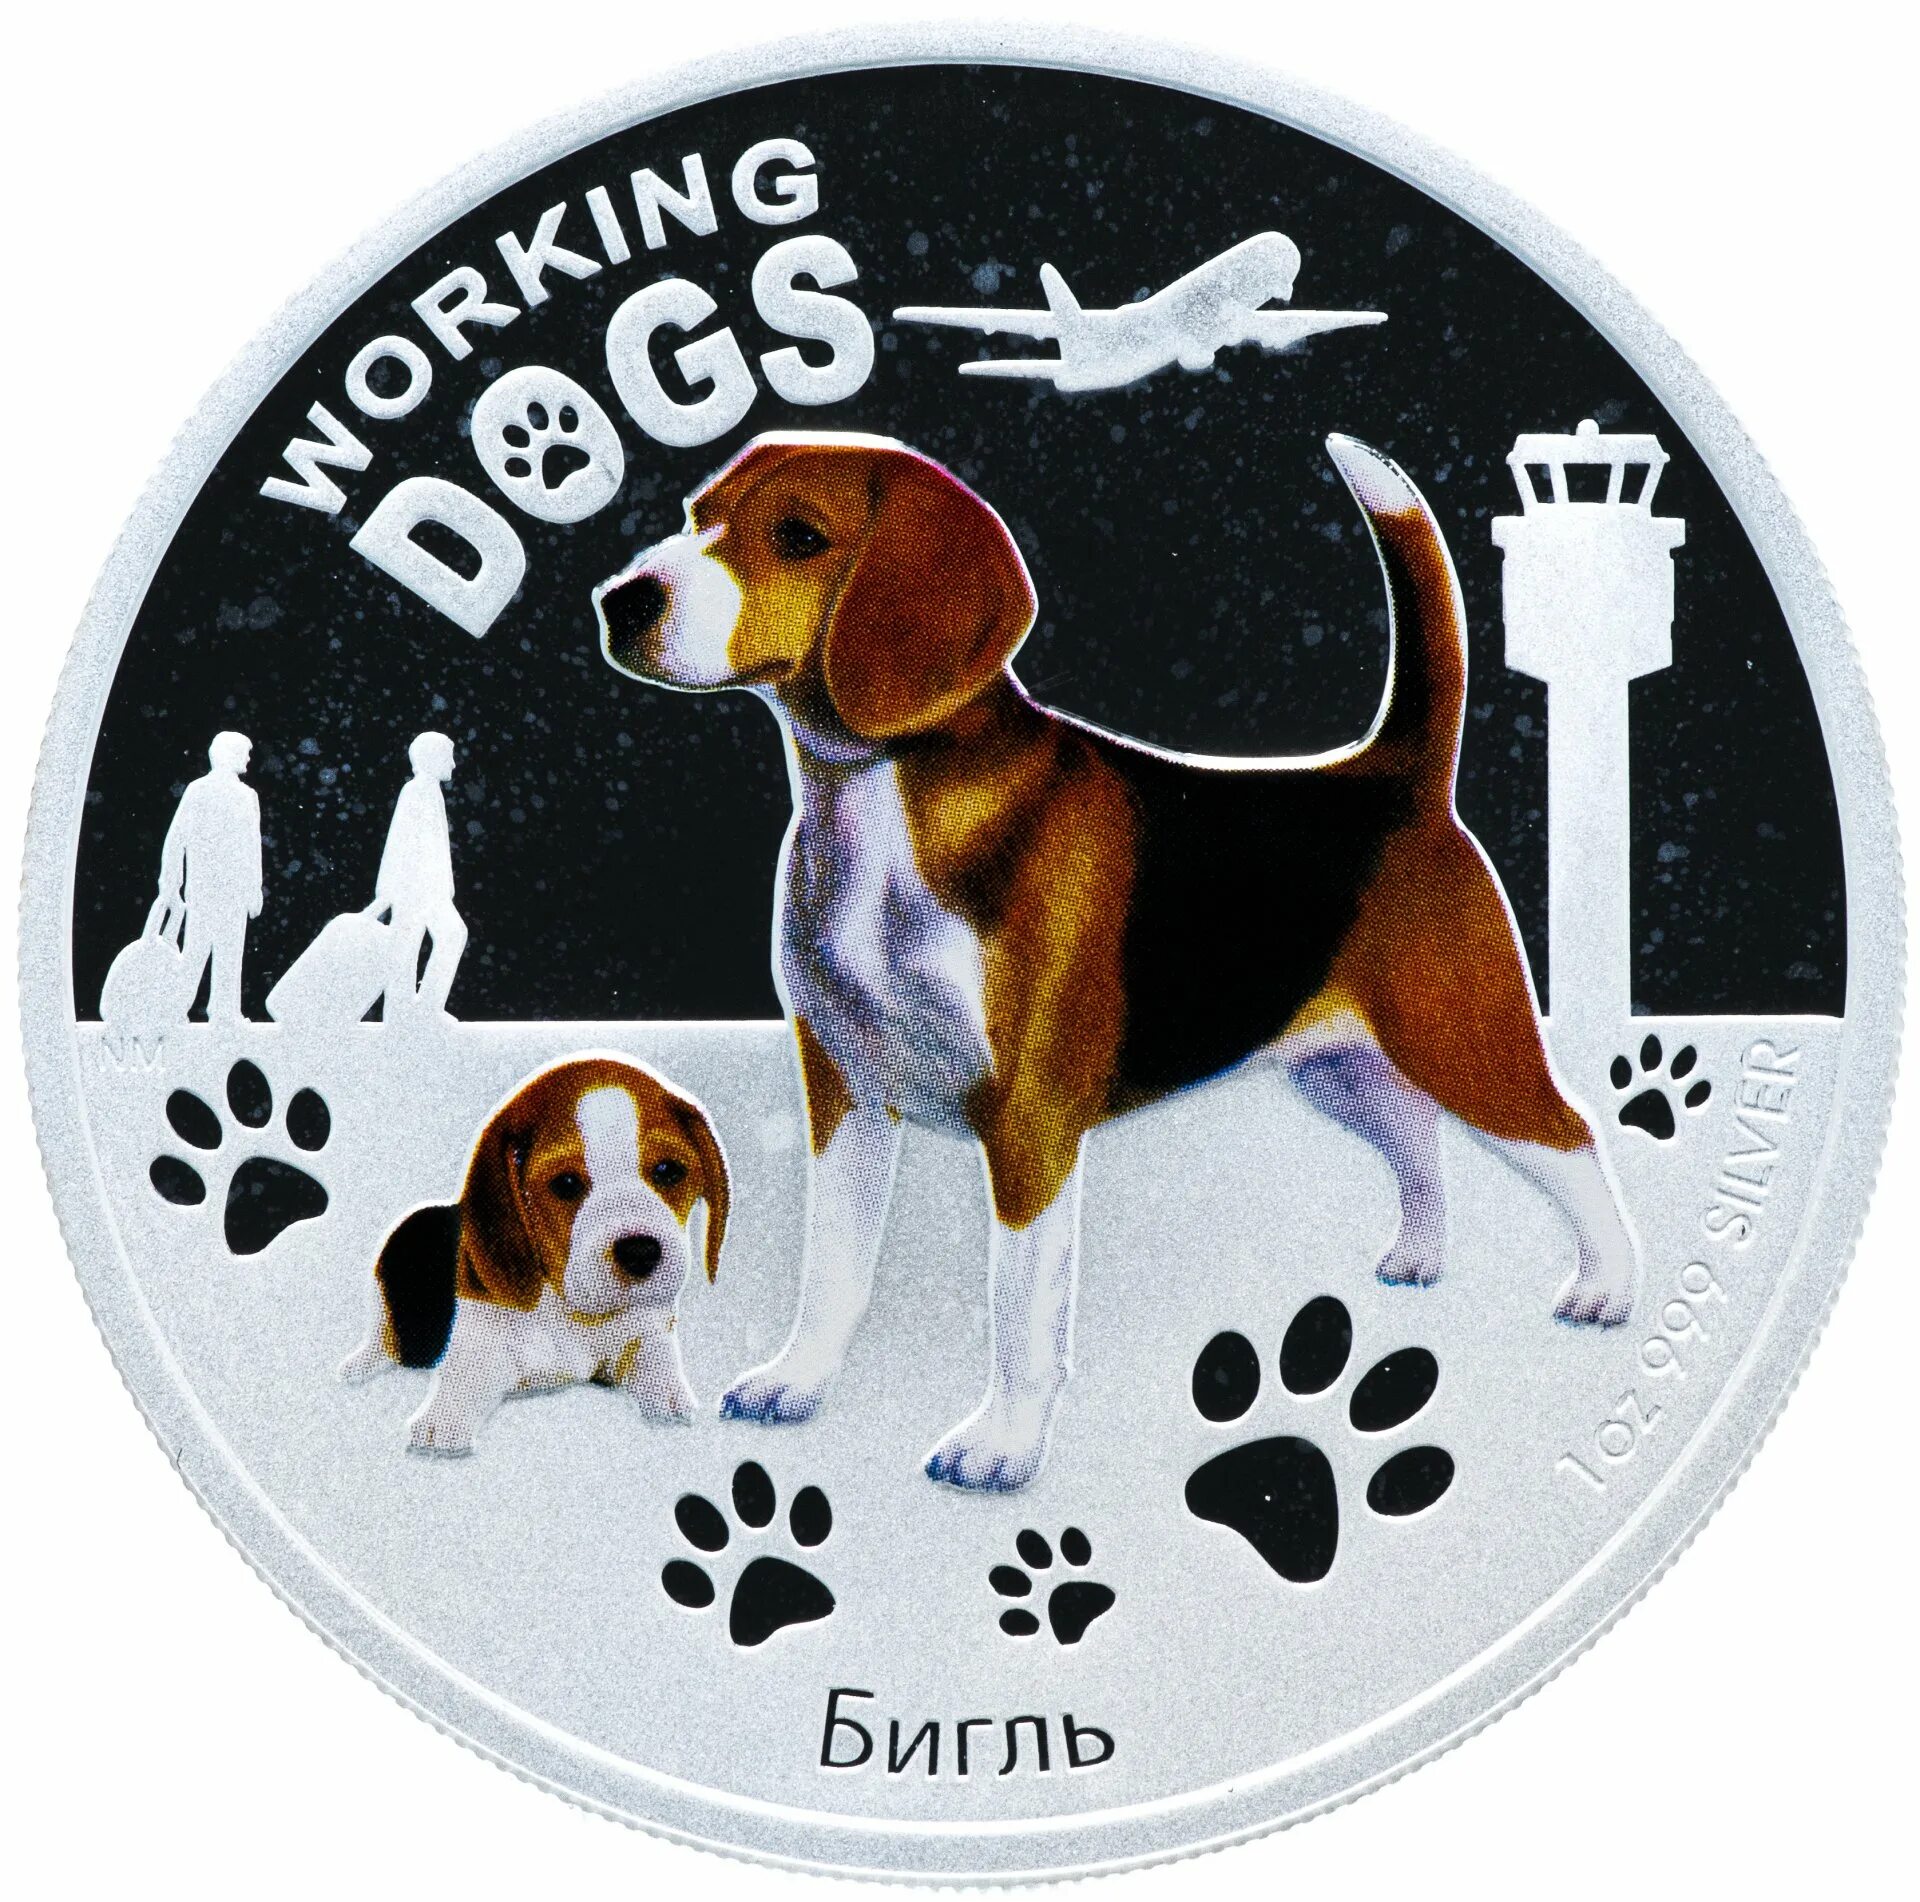 Bendog монета. Тувалу 1 доллар, 2011 рабочие собаки - Бигль. Coin working Dogs 1 Dollar Бигль. Бигль служебная собака. Бигль серебристый.